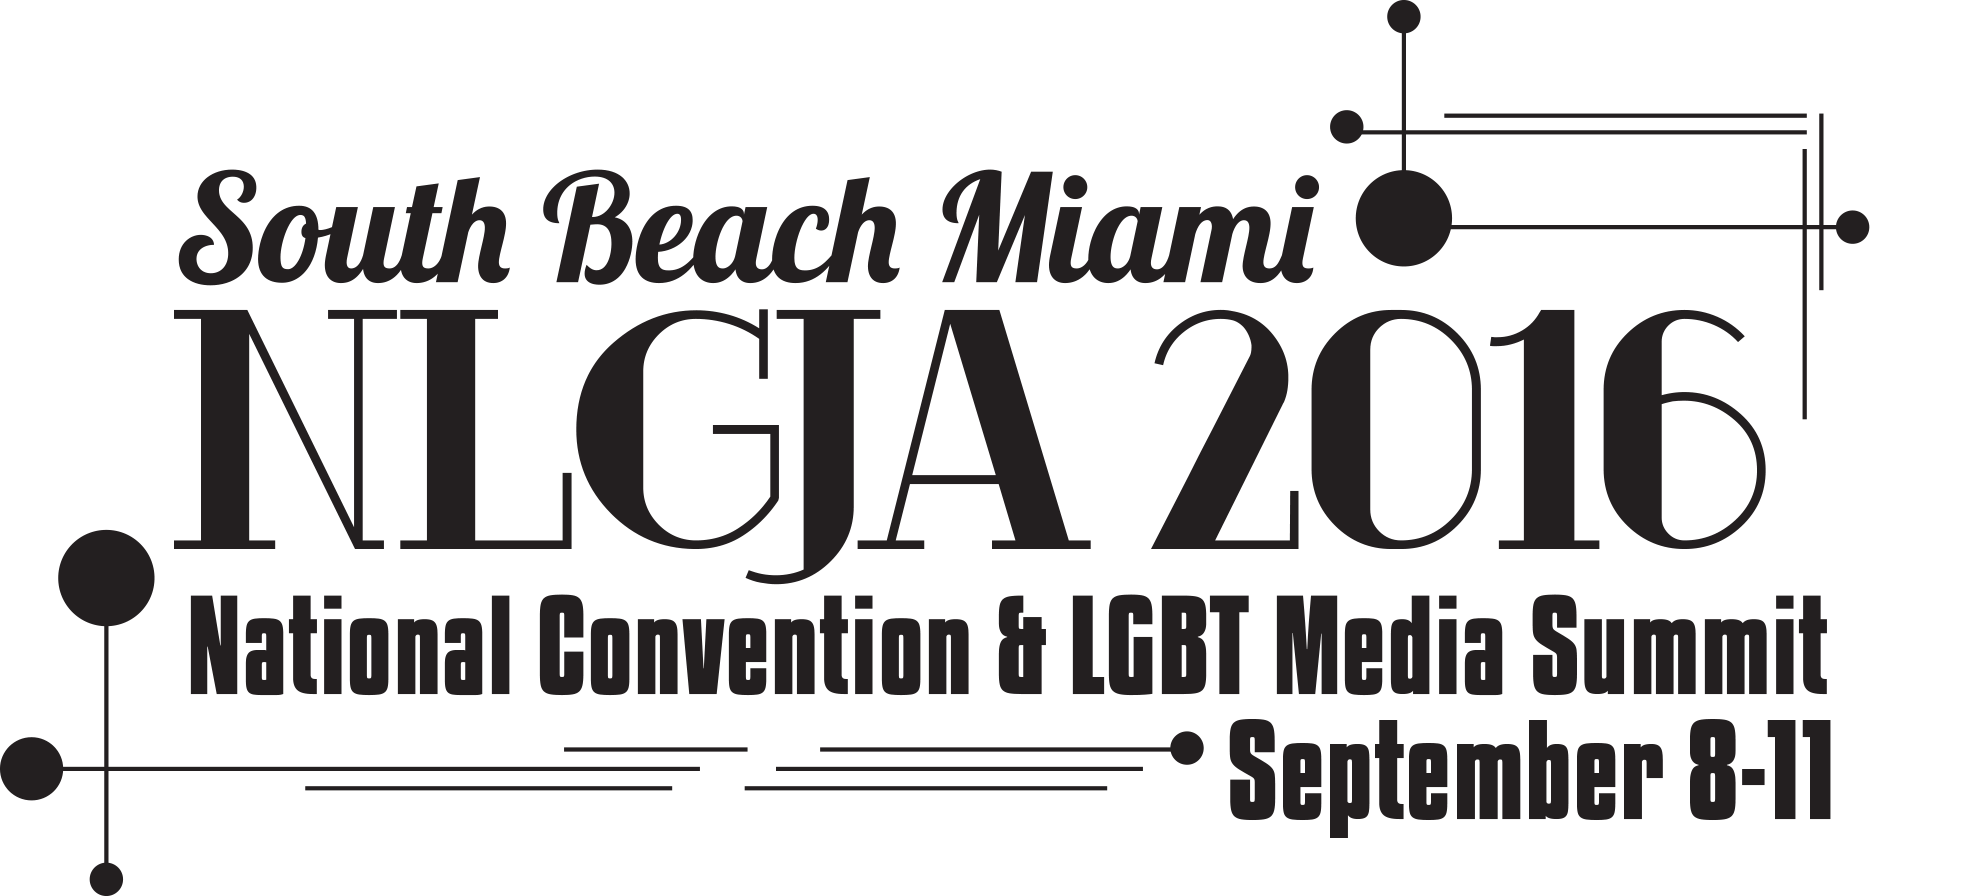 2016 National Convention & LGBT Media Summit